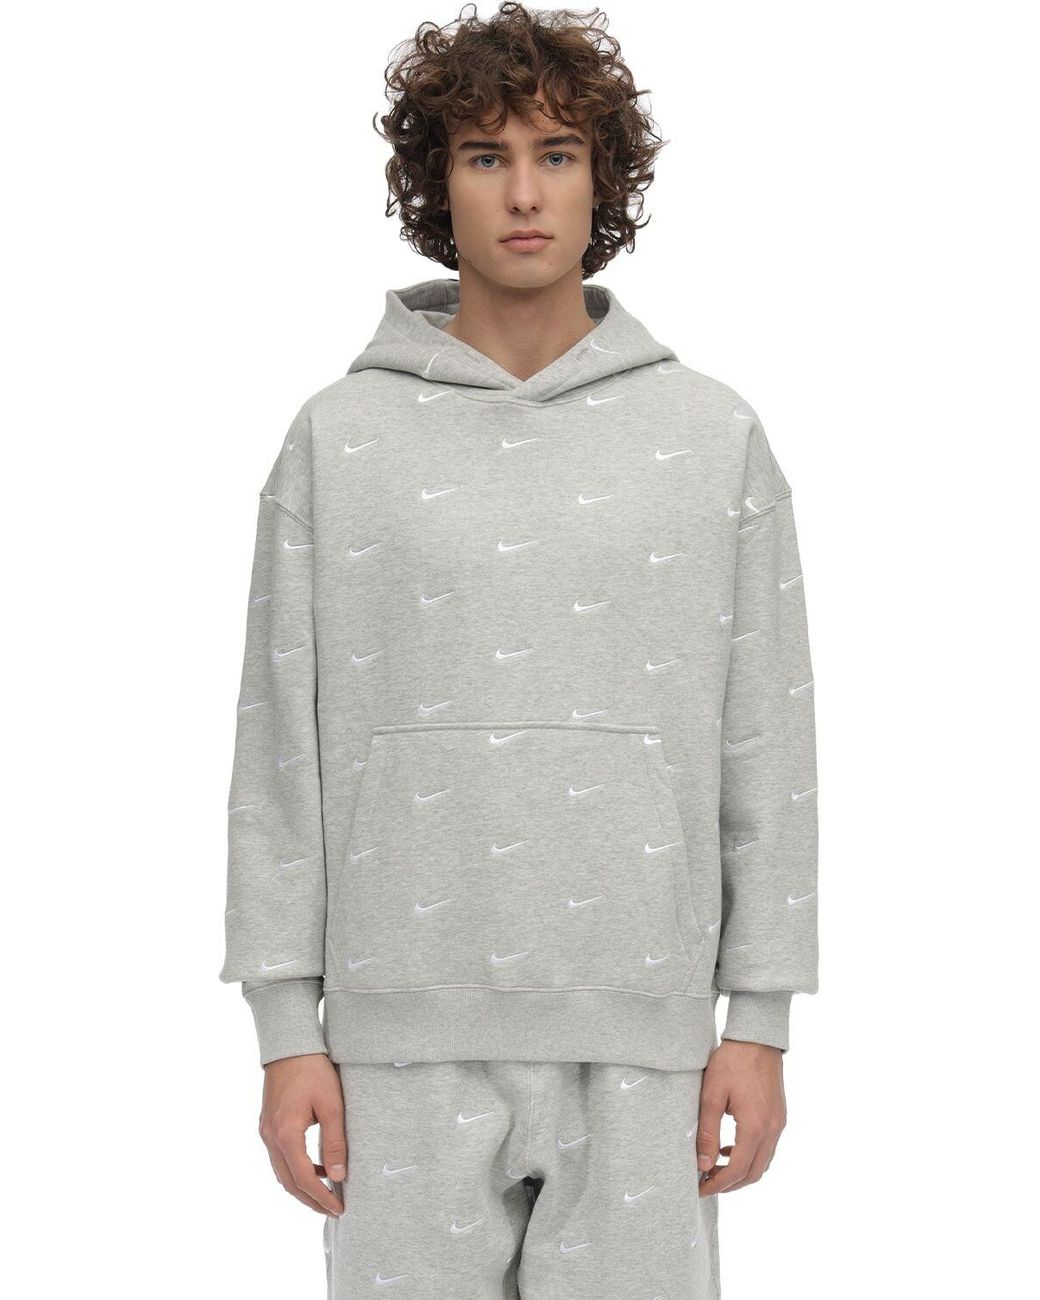 Nike Nrg Swoosh Logo Sweatshirt Hoodie in Grey for Men | Lyst Australia